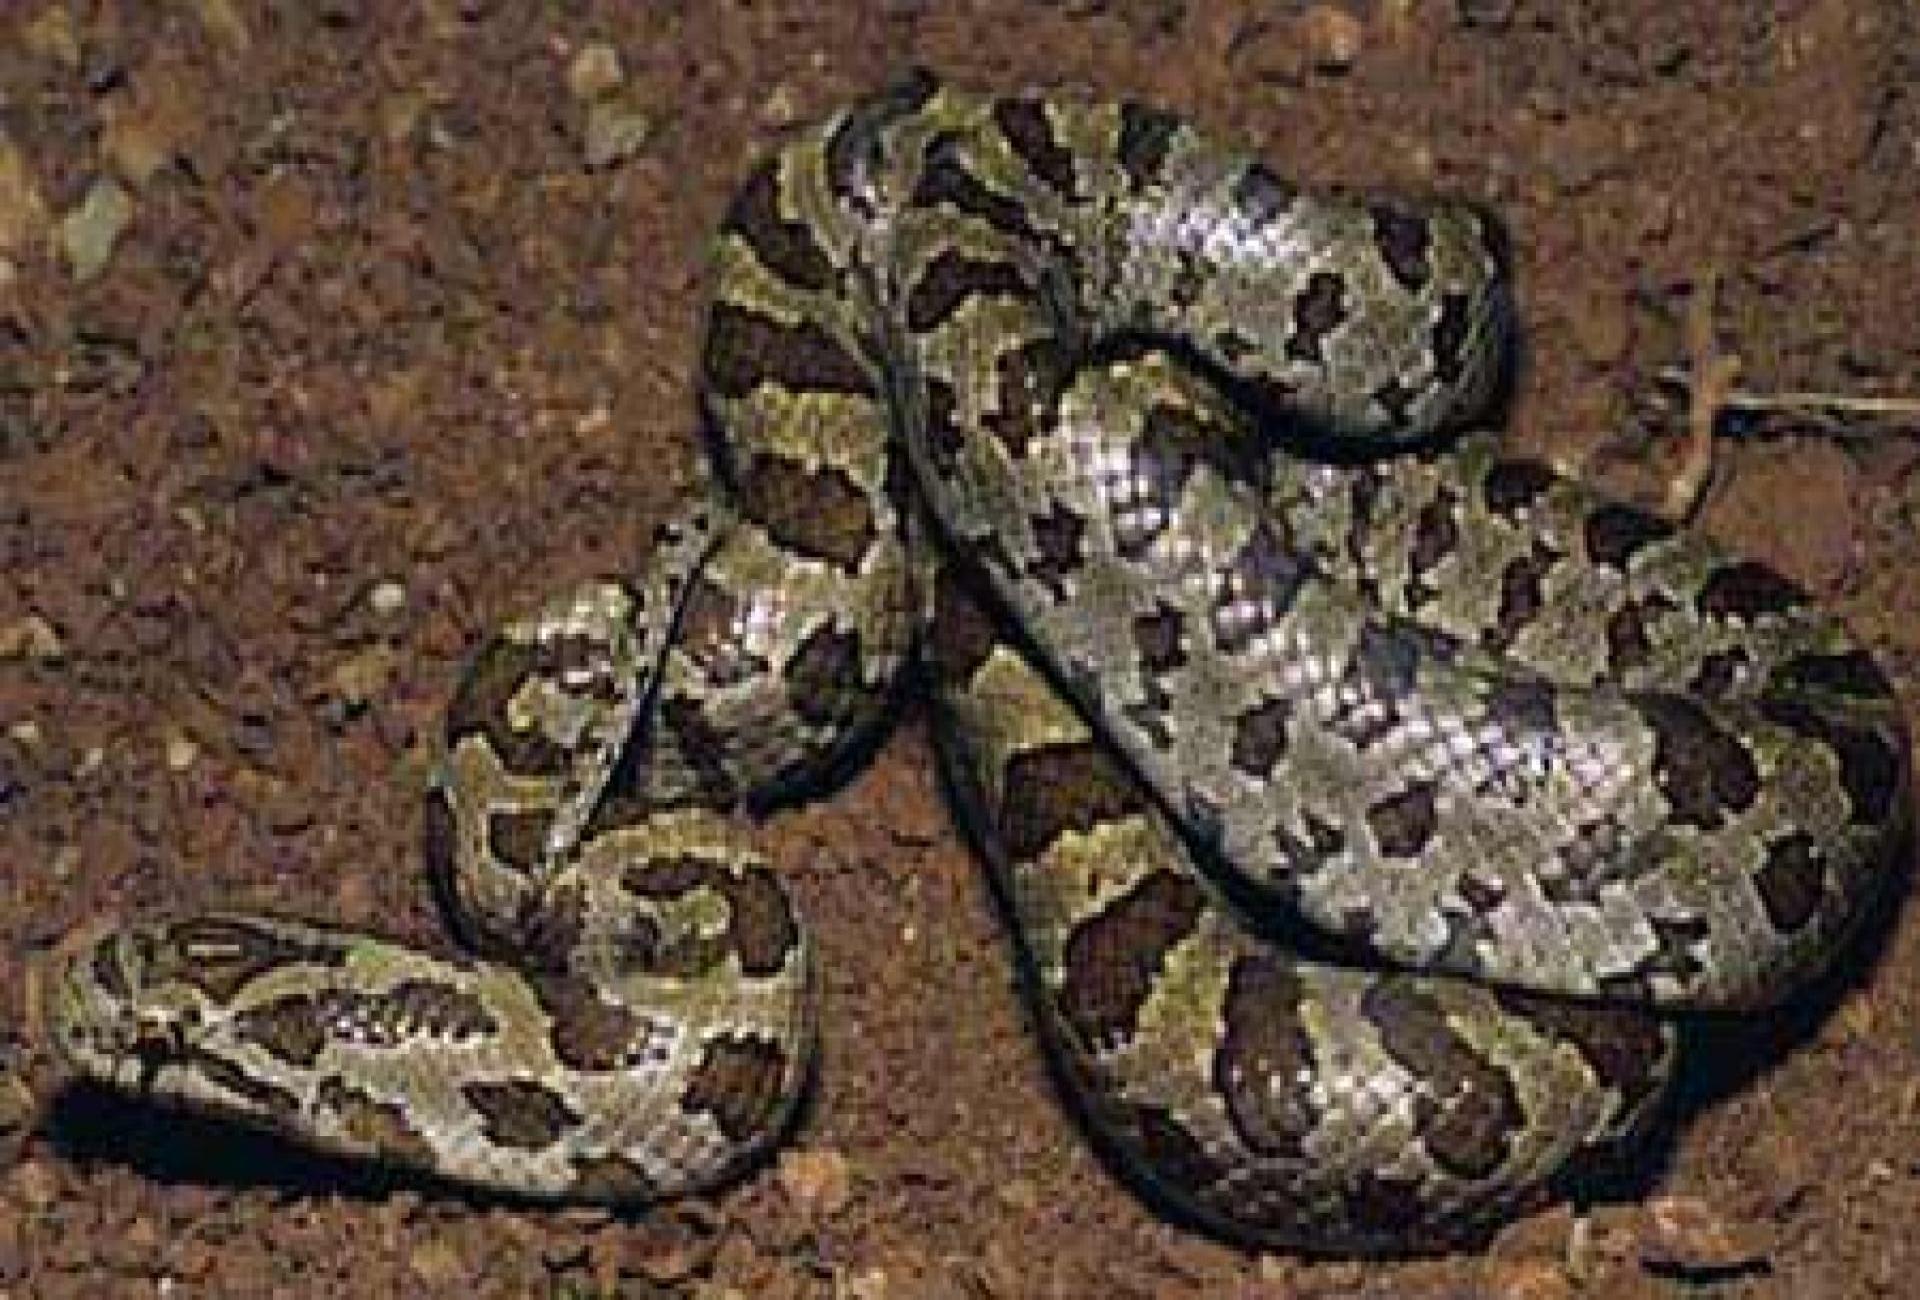 Prairie king snake